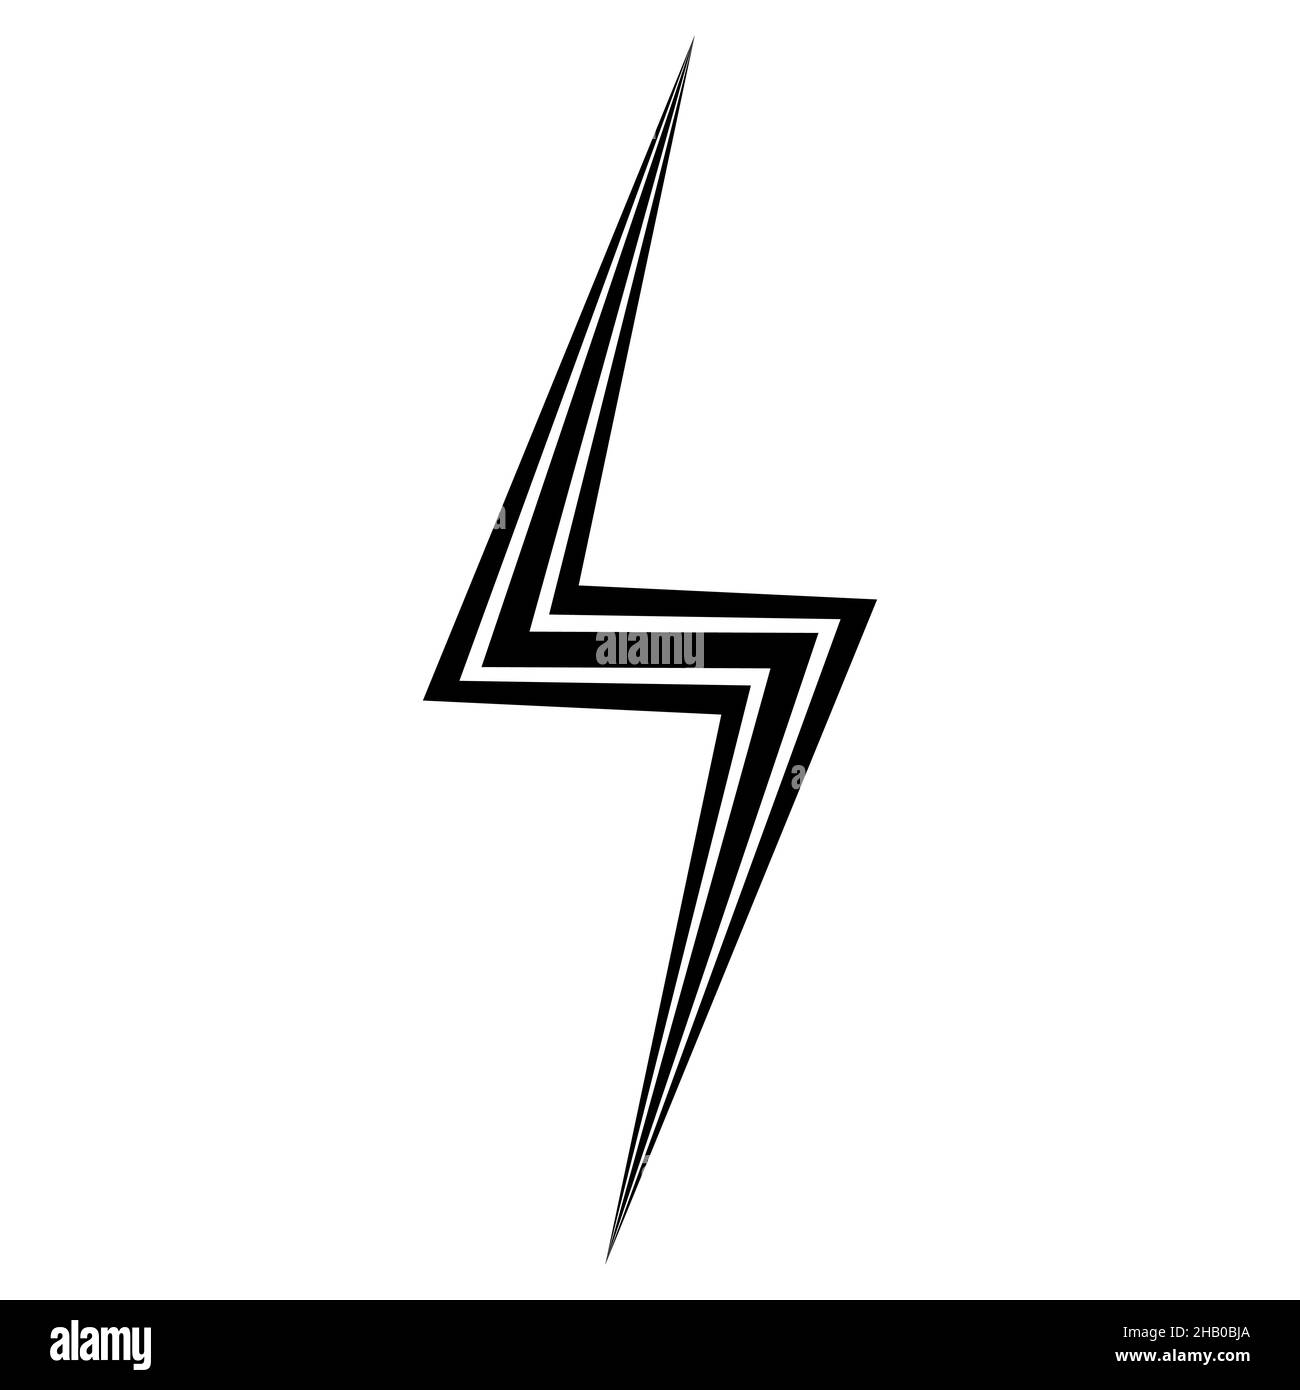 Logo triplo fulmine thunder bullone stock, icona fulmine illustrazione Illustrazione Vettoriale